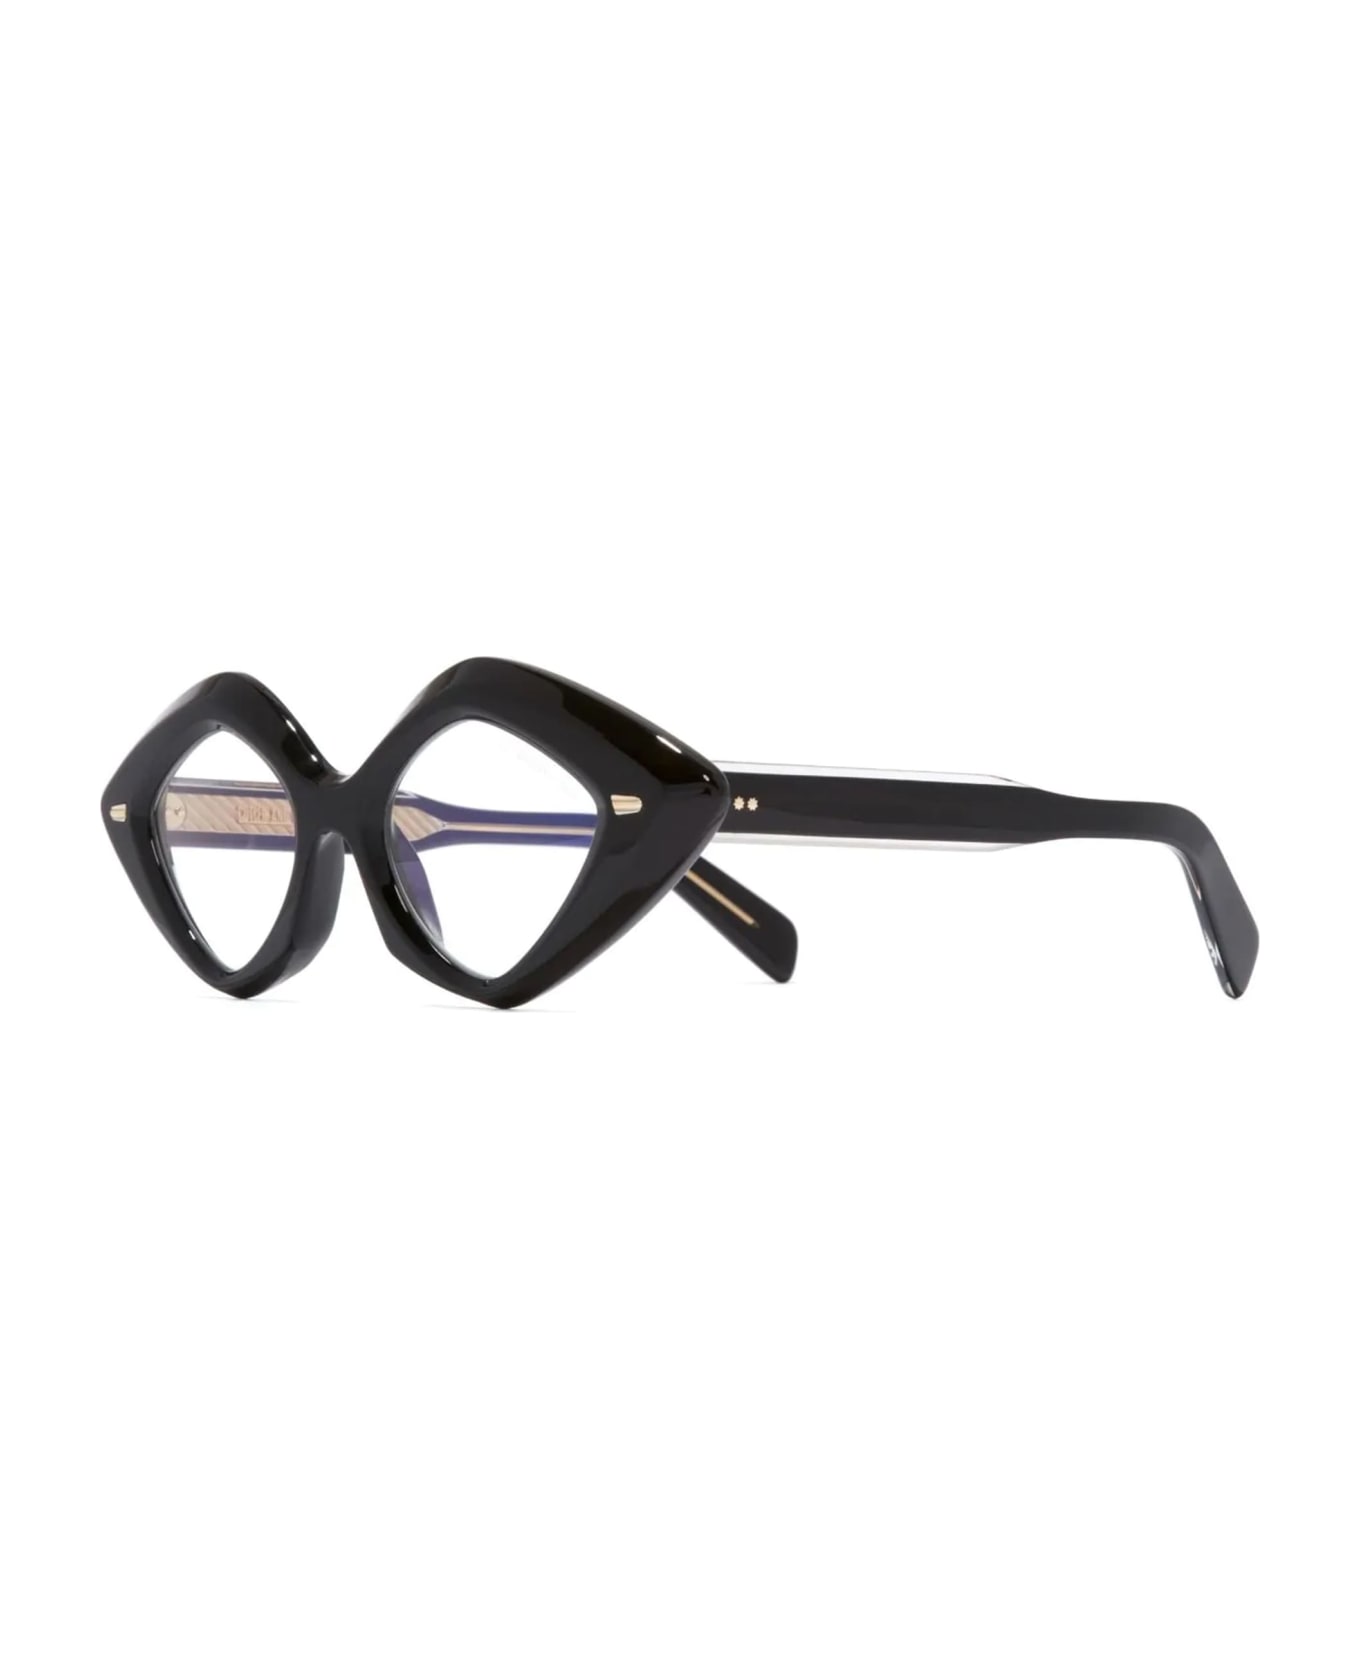 Cutler and Gross 9126 / Black Rx Glasses - Black